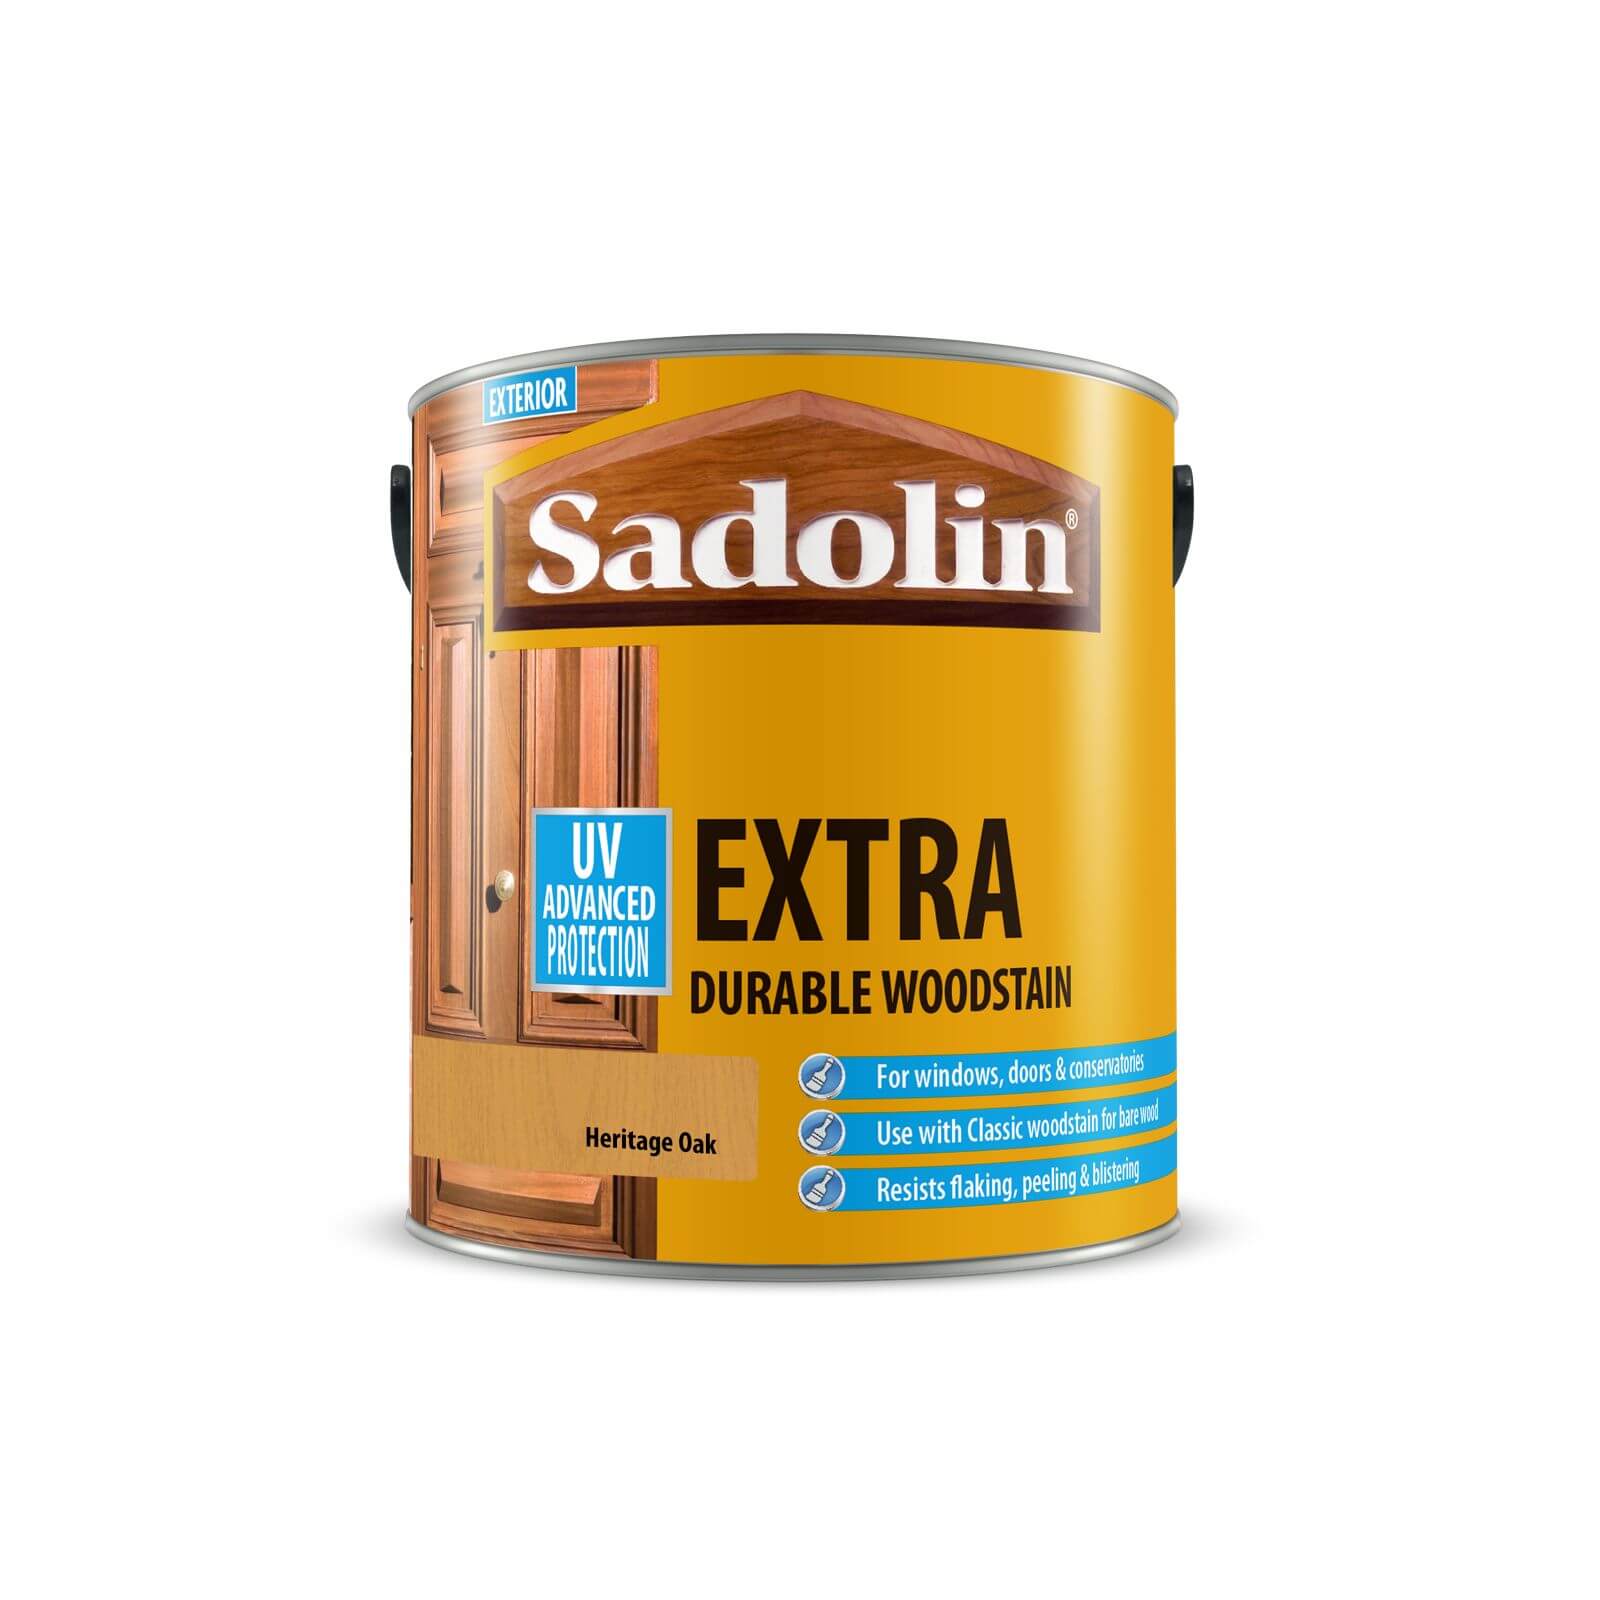 Sadolin Extra Durable Woodstain Heritage Oak - 2.5L